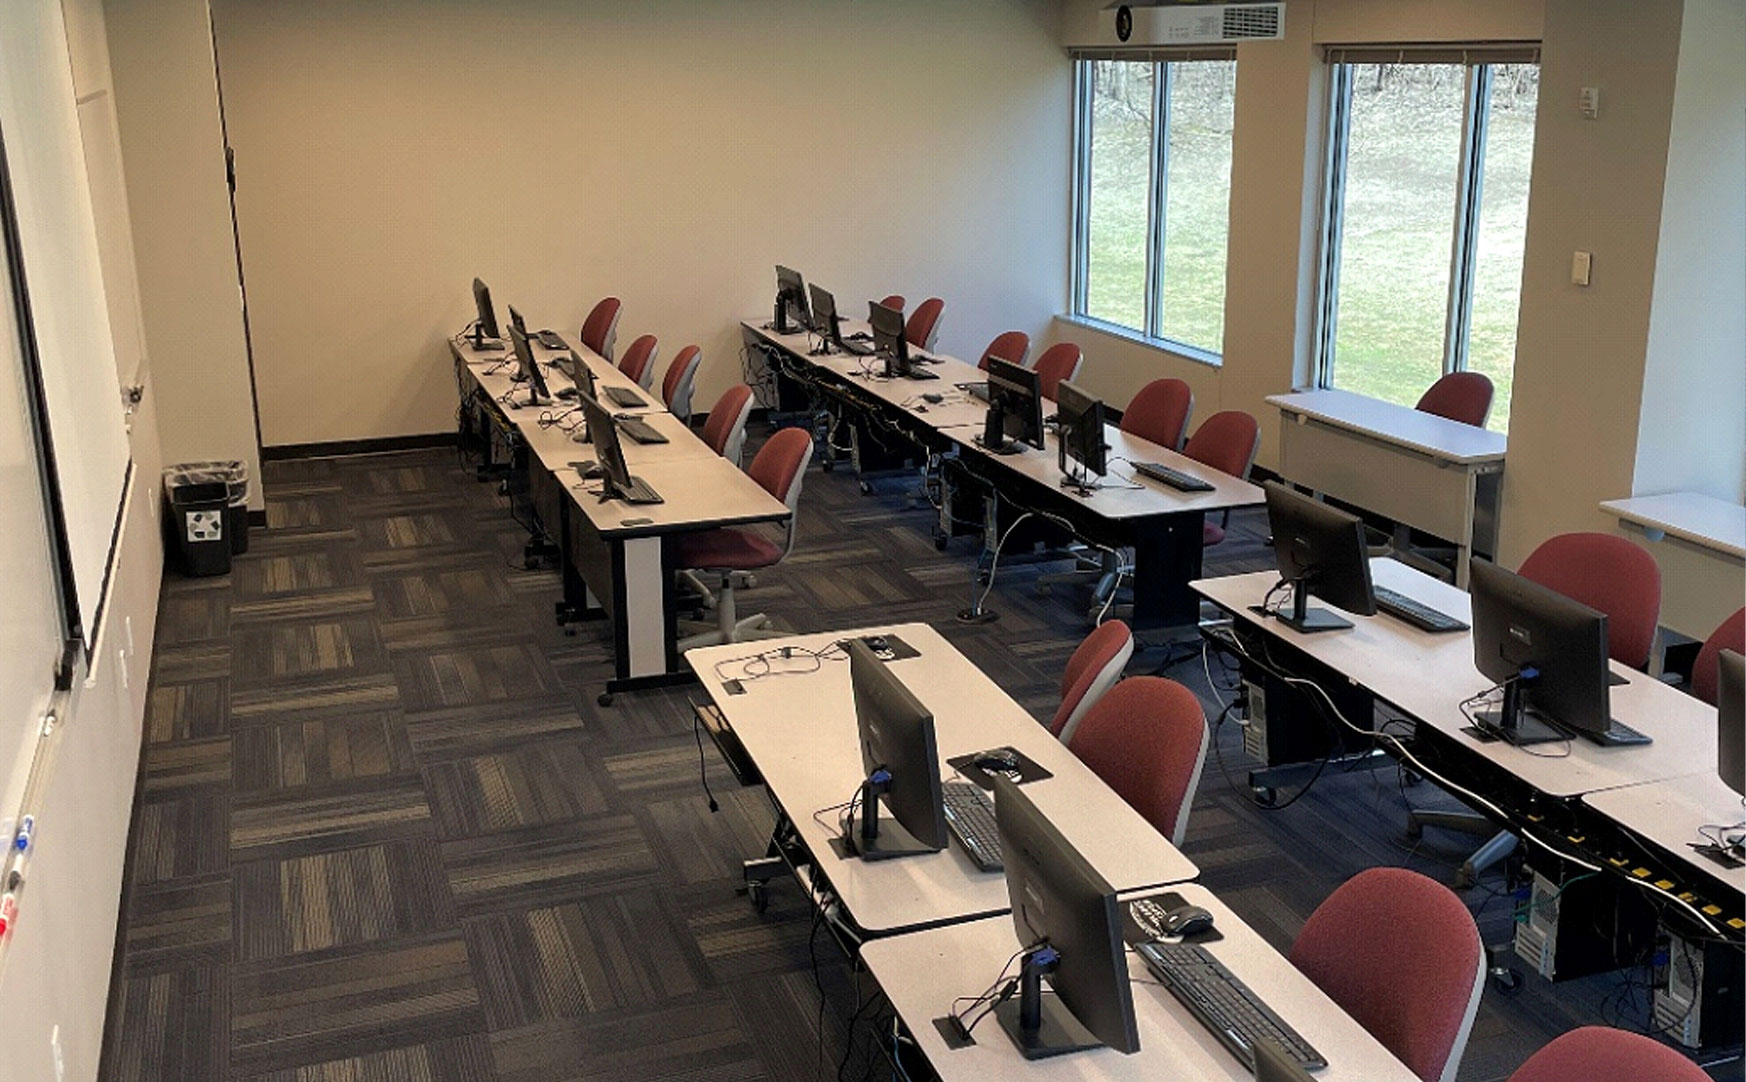 Enterprise Room at Knowledge Transfer Training Center in Eagan, MN